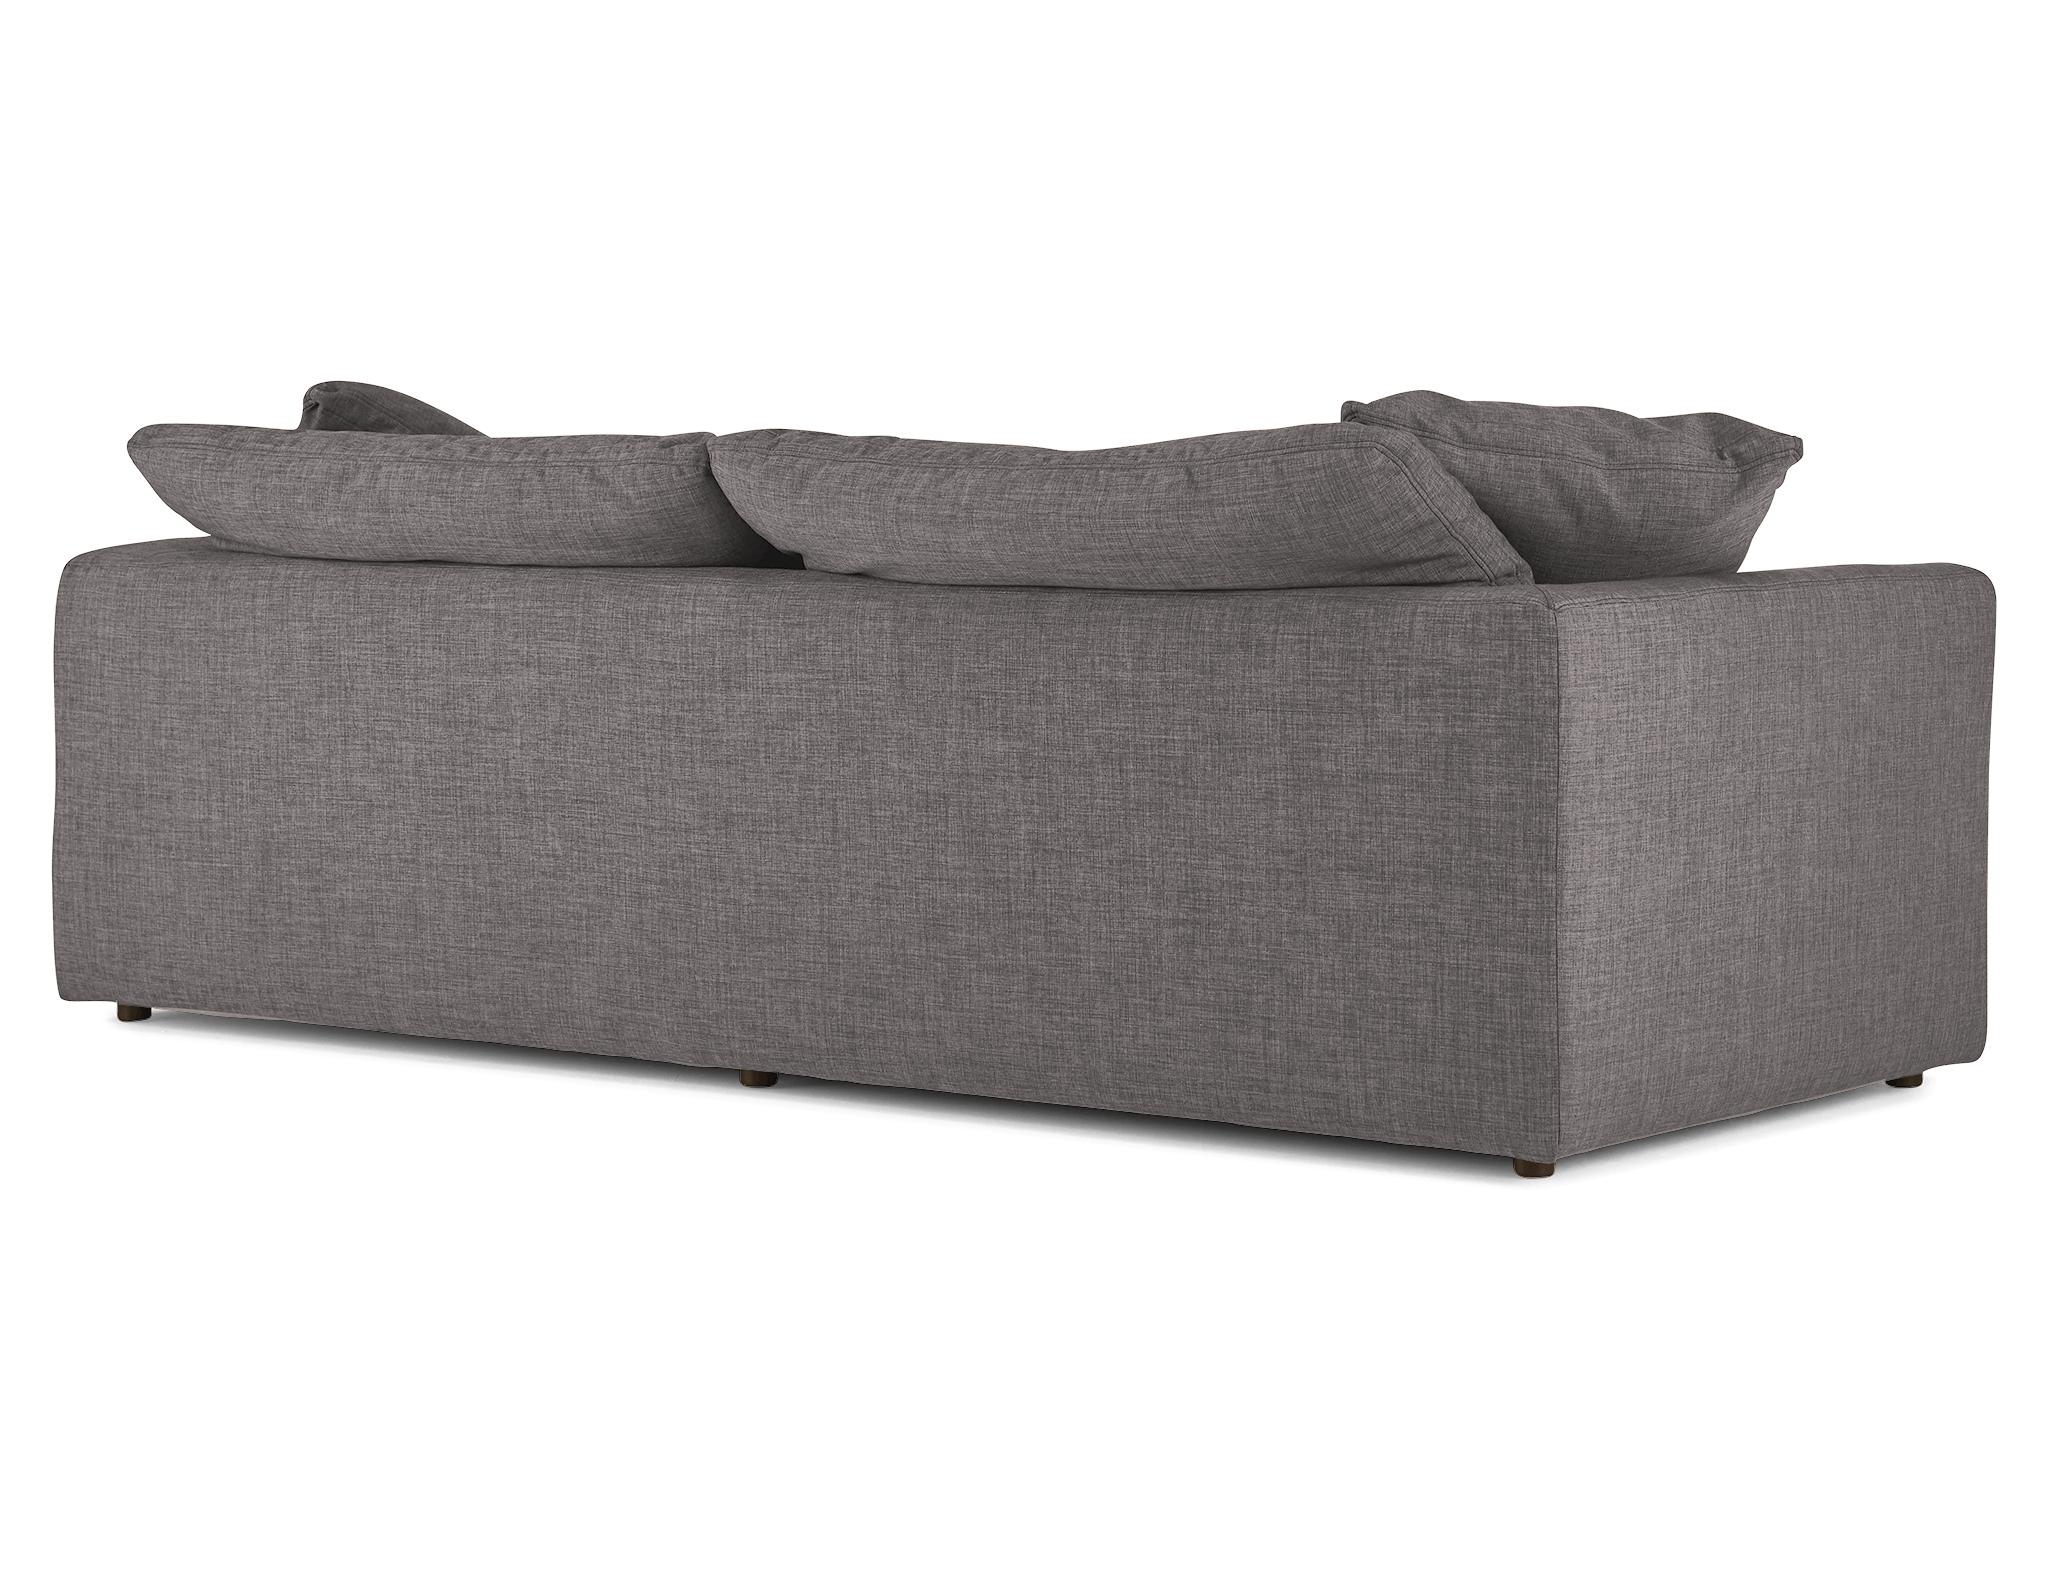 Gray Bryant Mid Century Modern Sofa - Taylor Felt Grey - Image 3